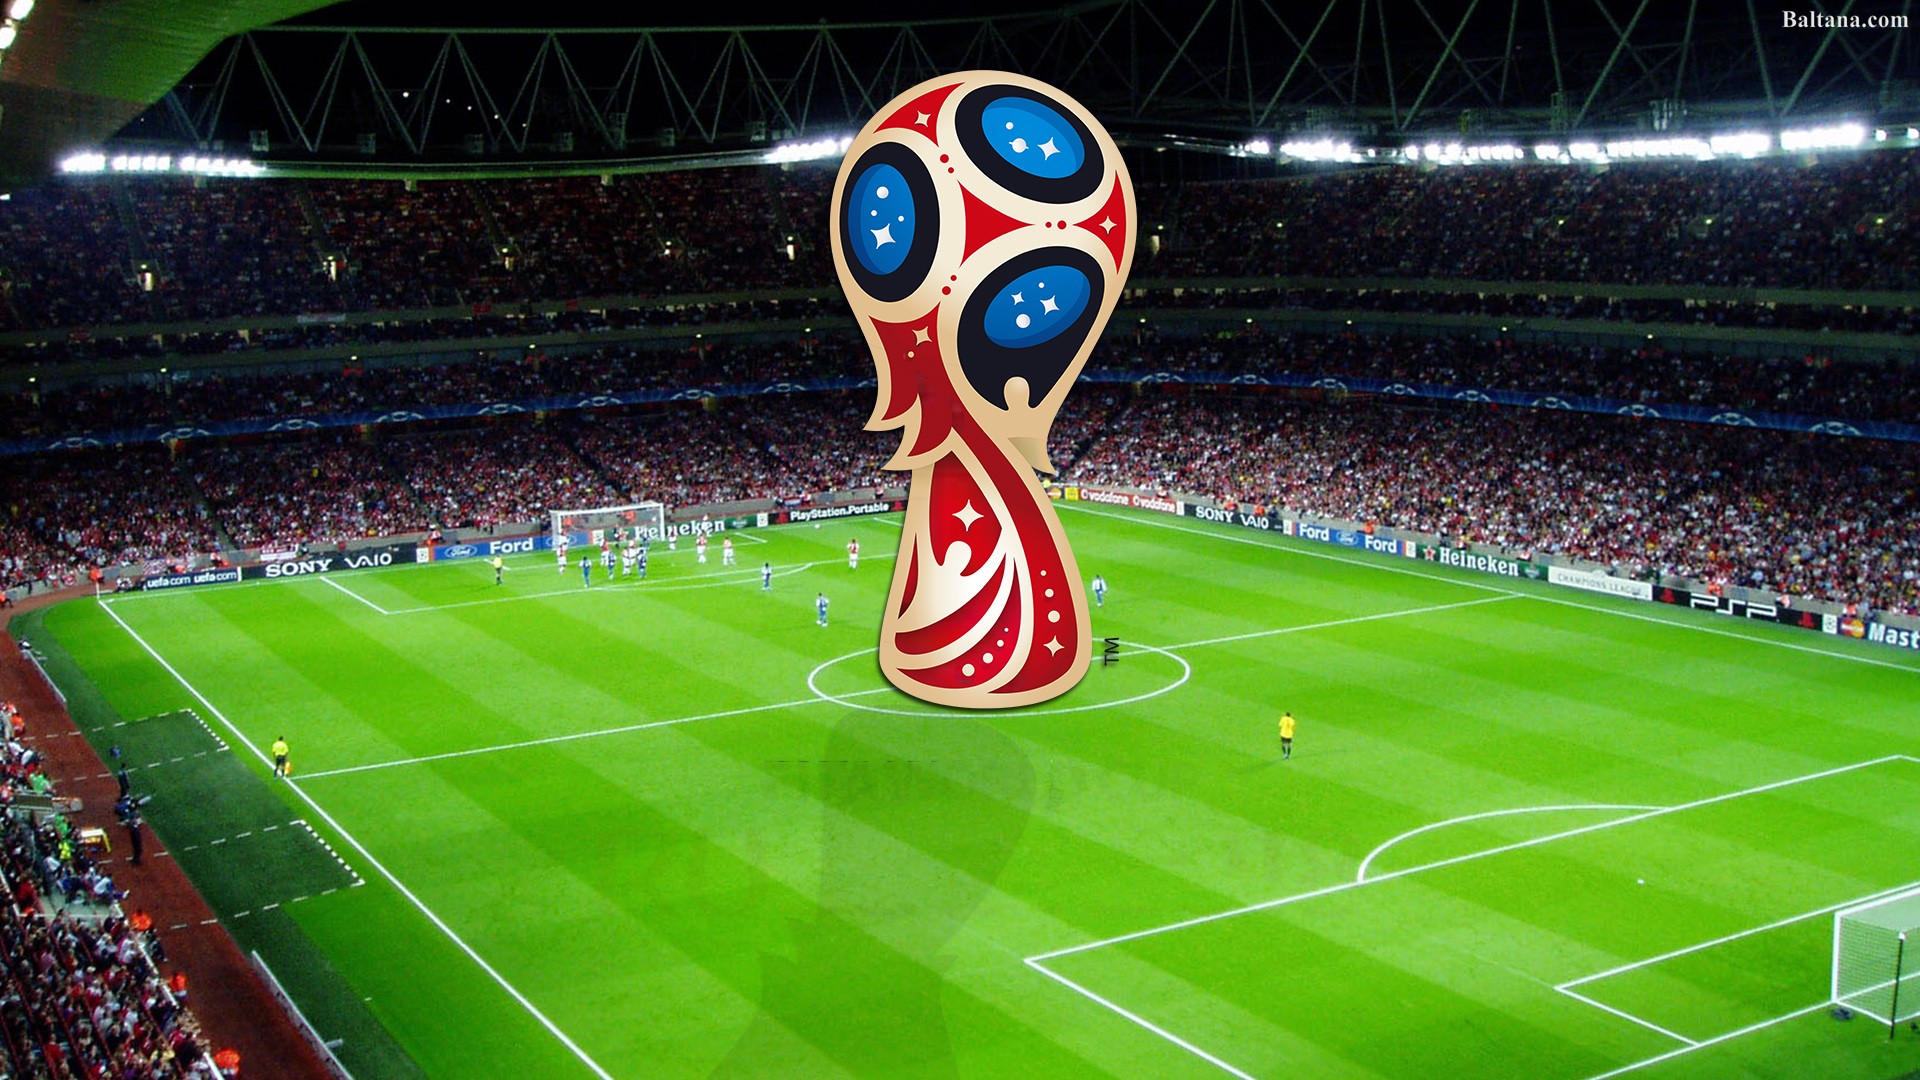 Fifa World Cup Wallpaper Full HD Baltana